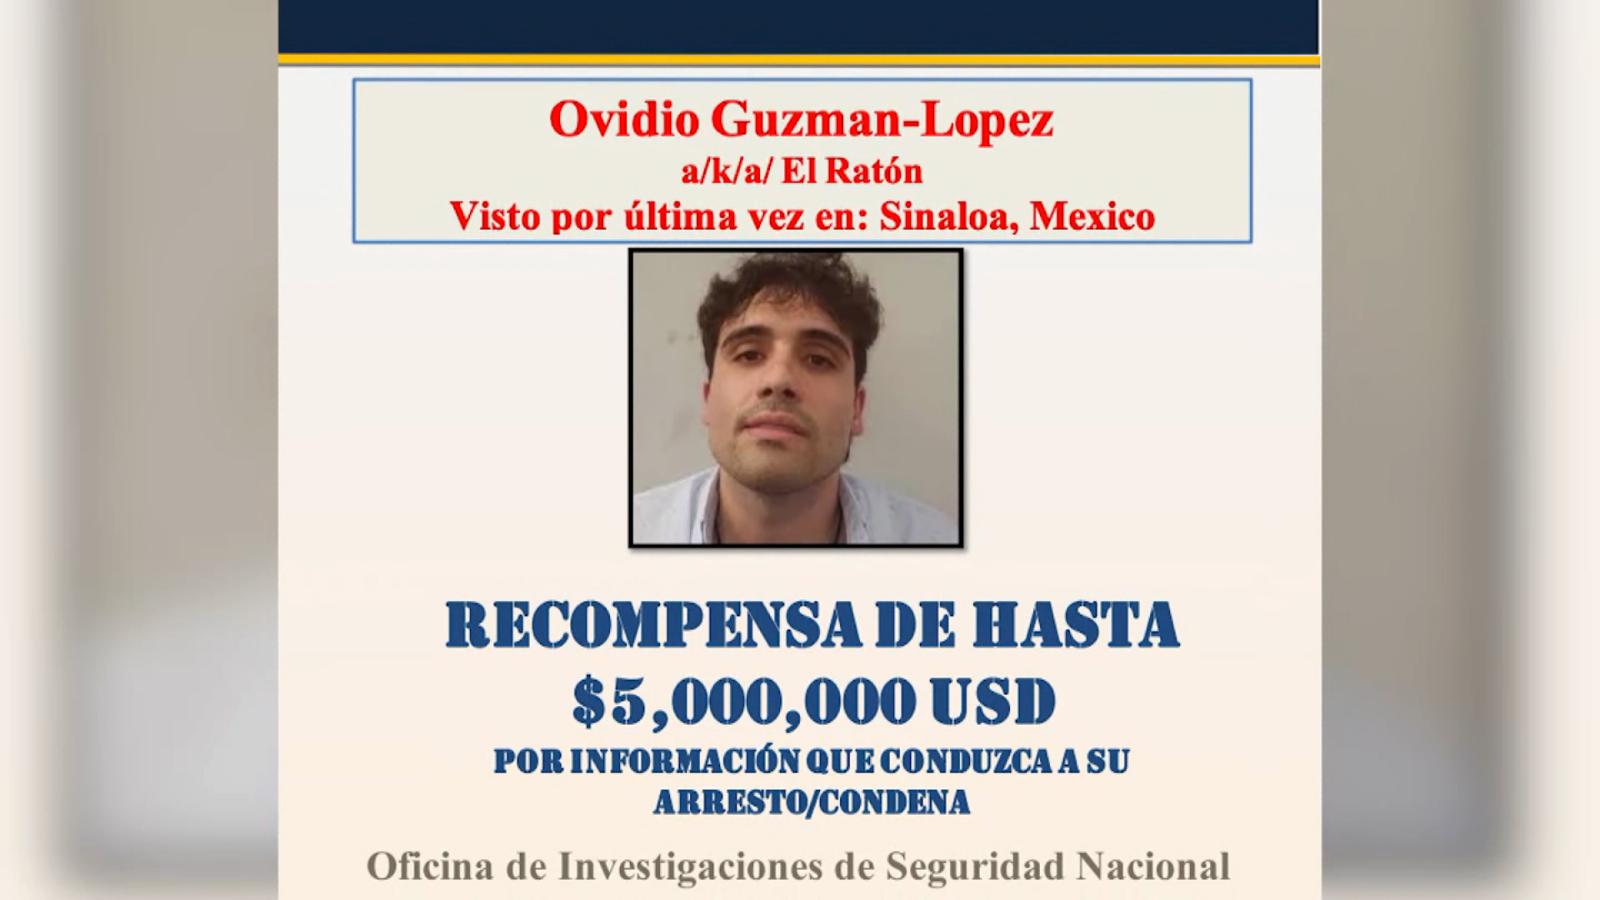 The US charges against Ovidio Guzmán